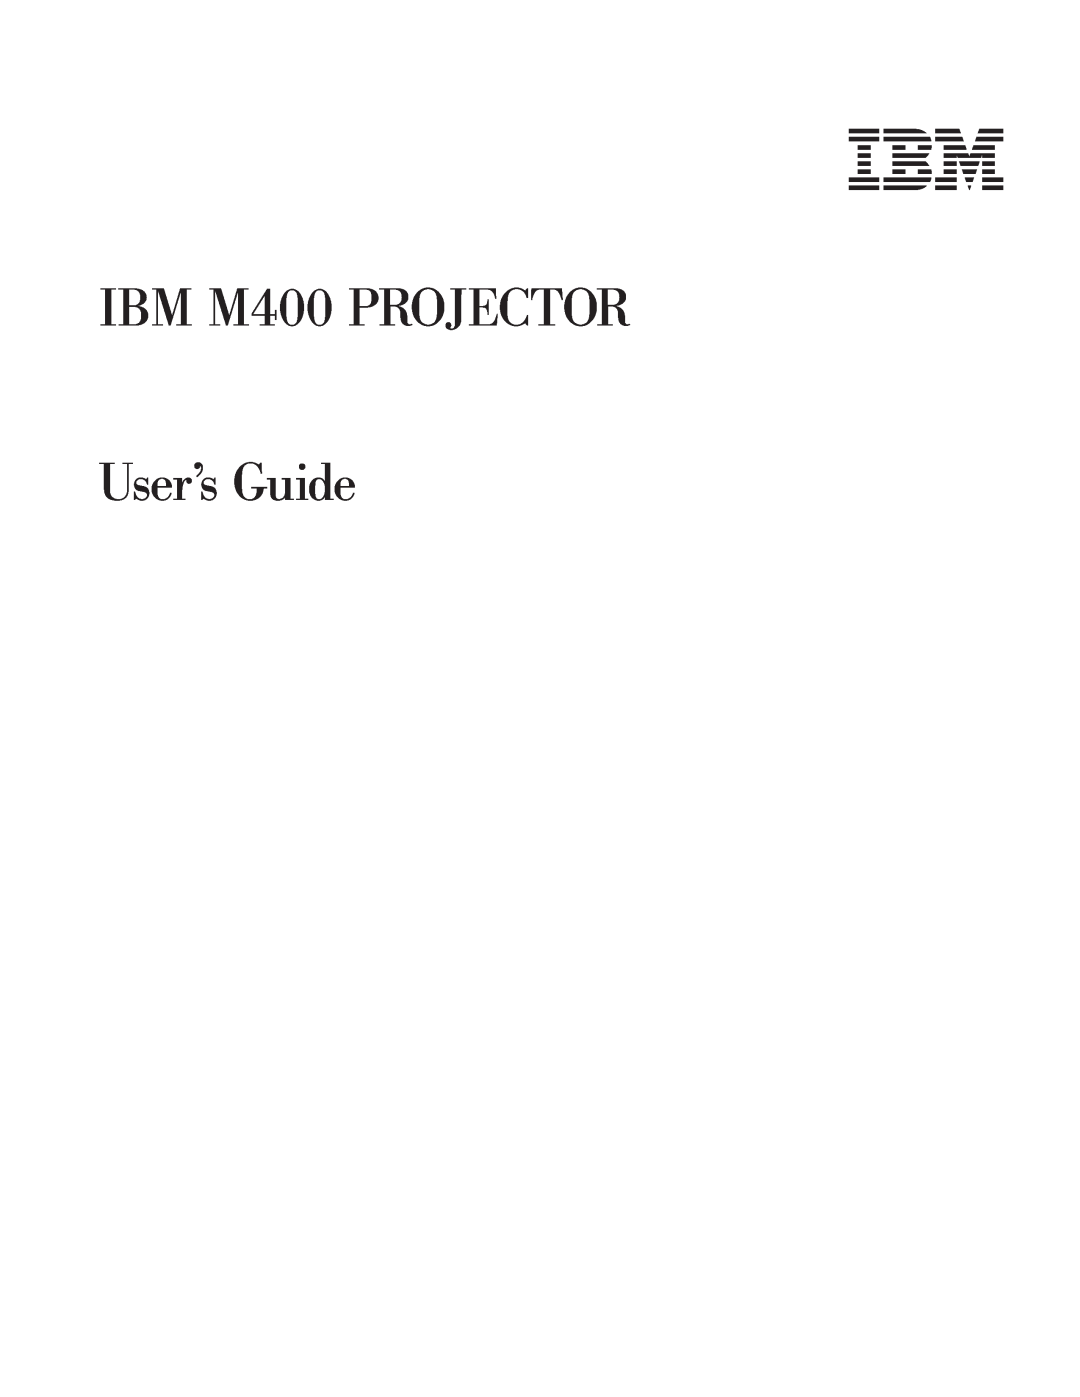 IBM manual IBM M400 PROJECTOR User’s Guide 